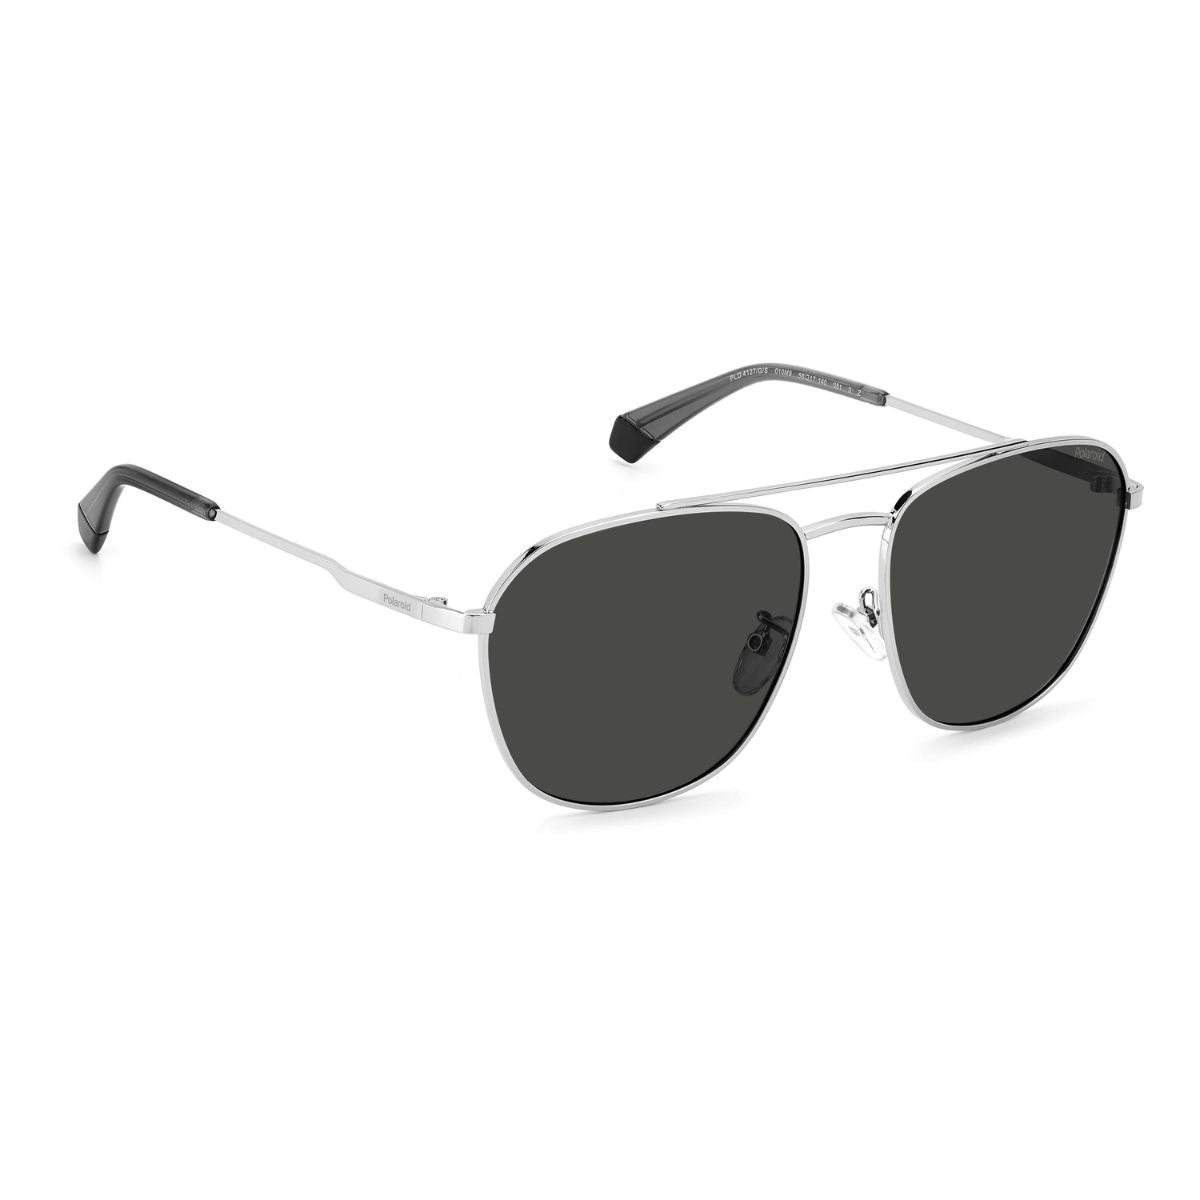 "Trending Metal Polarized Sunglasses For Mens At Optorium"